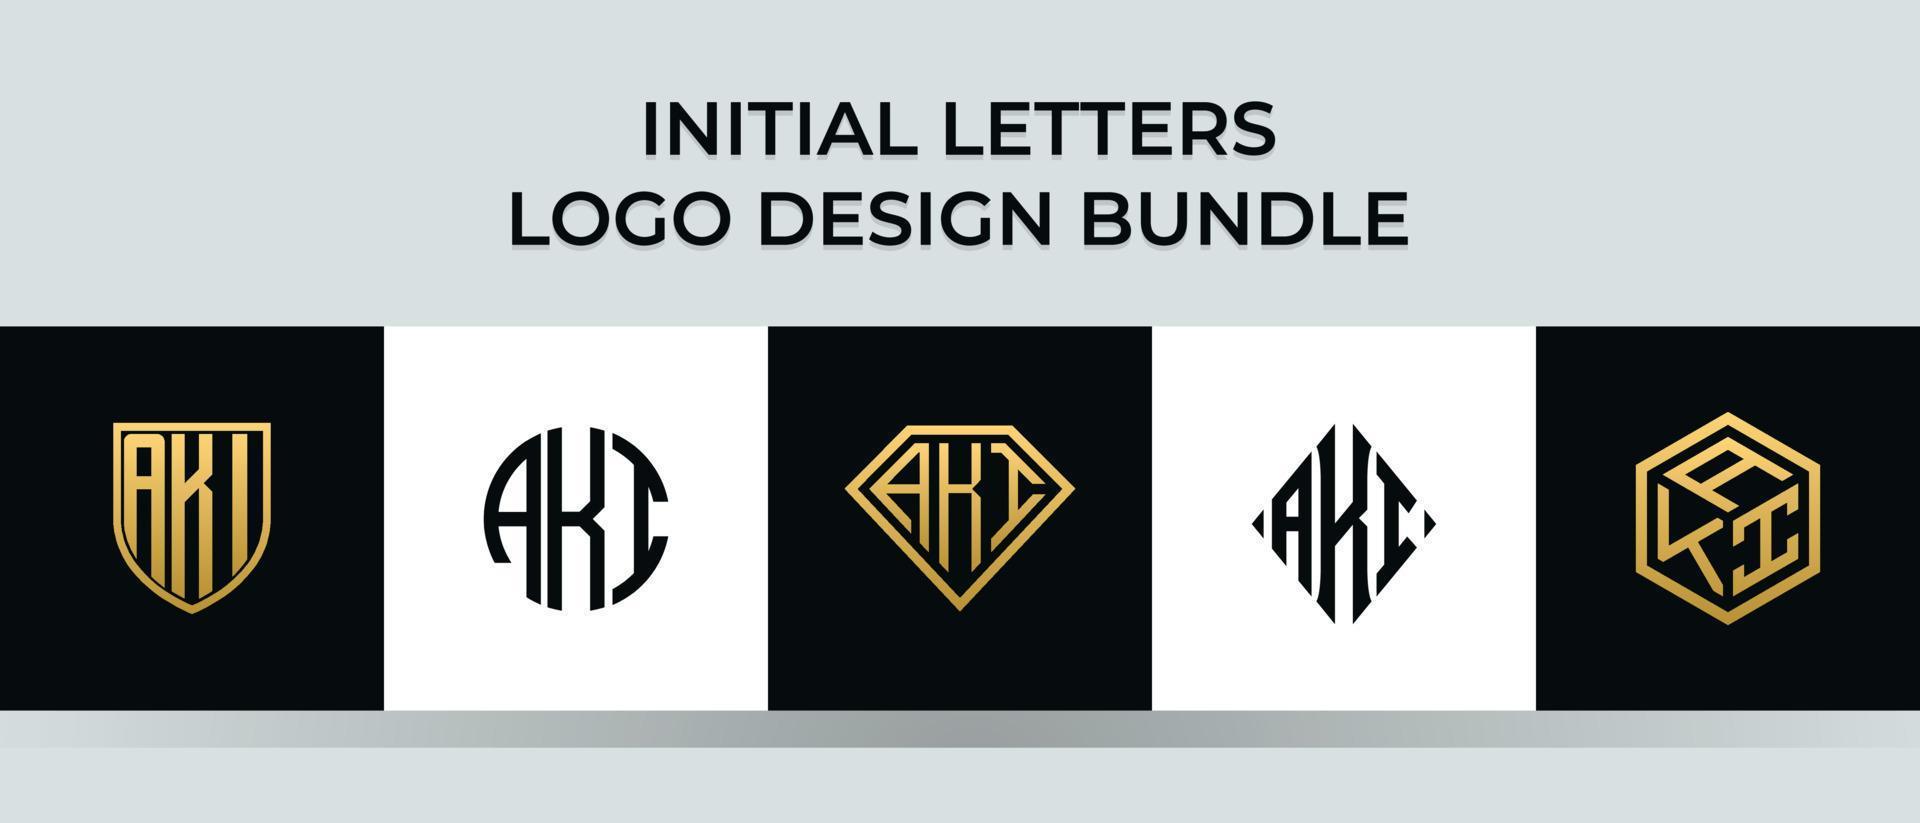 Initial letters AKI logo designs Bundle vector